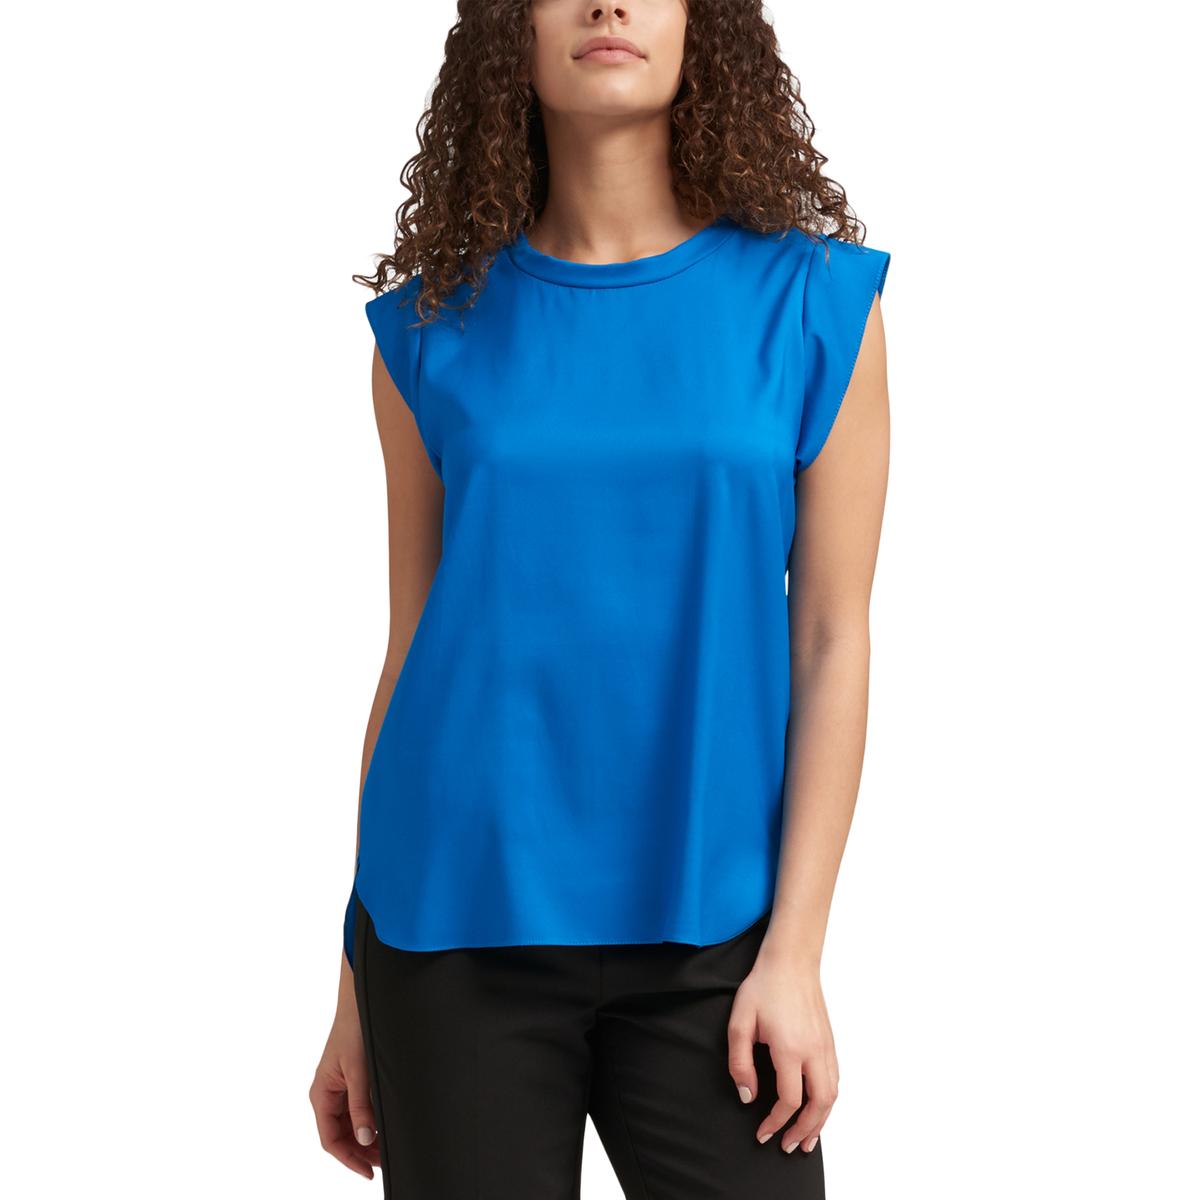 DKNY Womens Foundation Blue Crewneck Cap Sleeves Tee Top Shirt XL BHFO ...